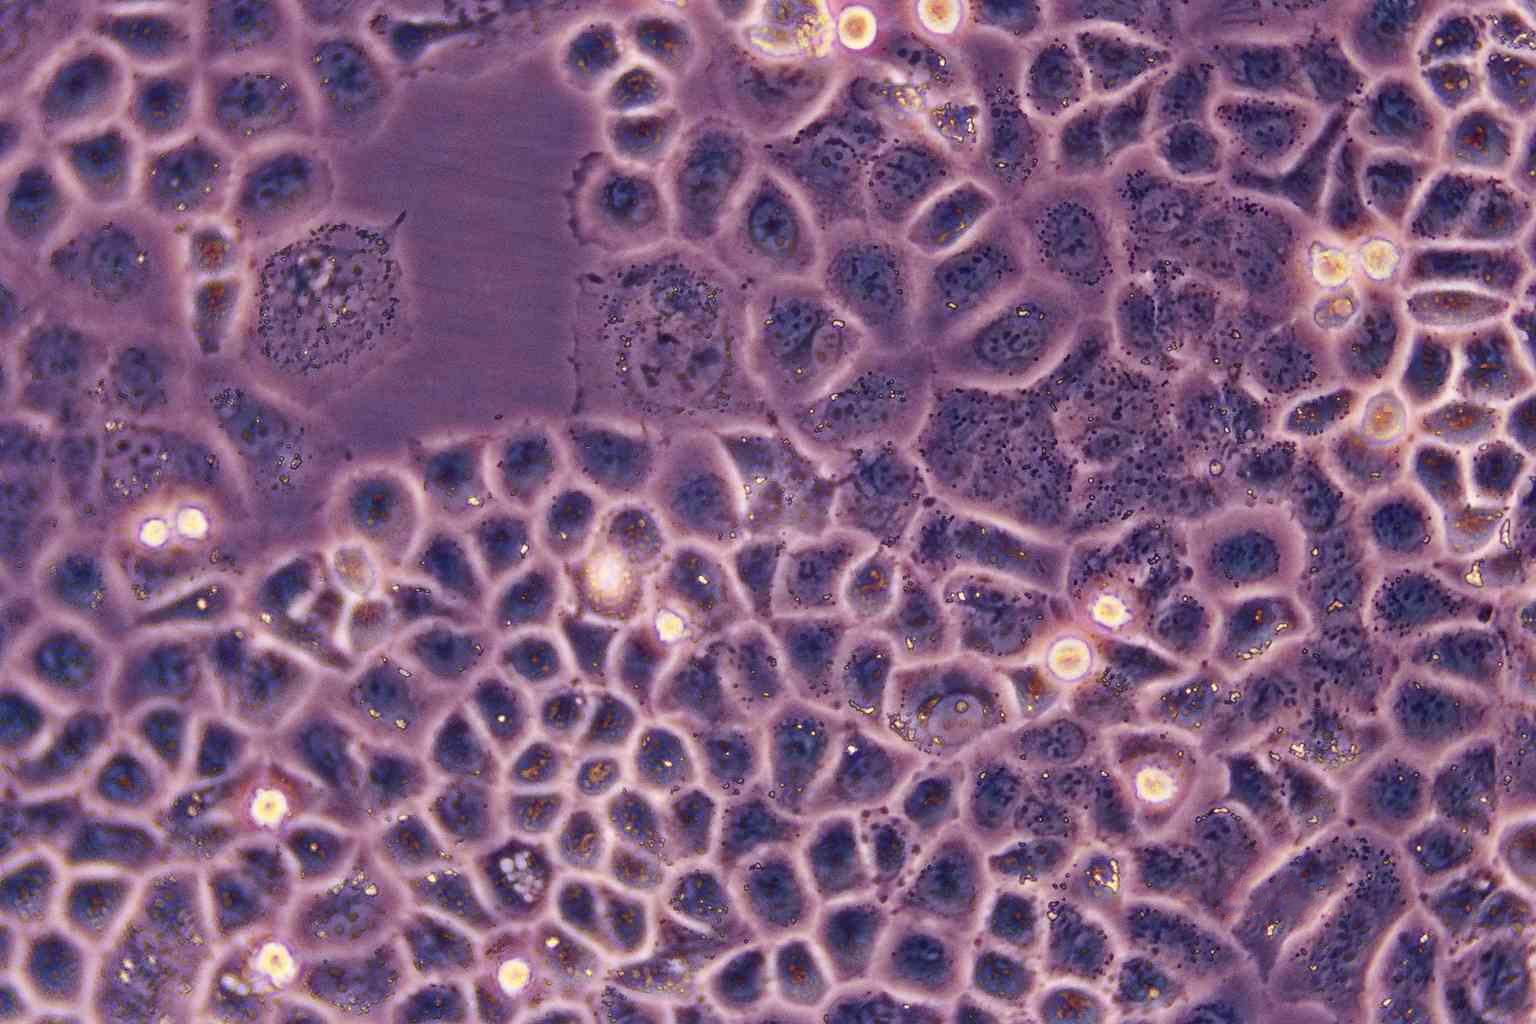 SaOS-2 epithelioid cells人成骨肉瘤细胞系